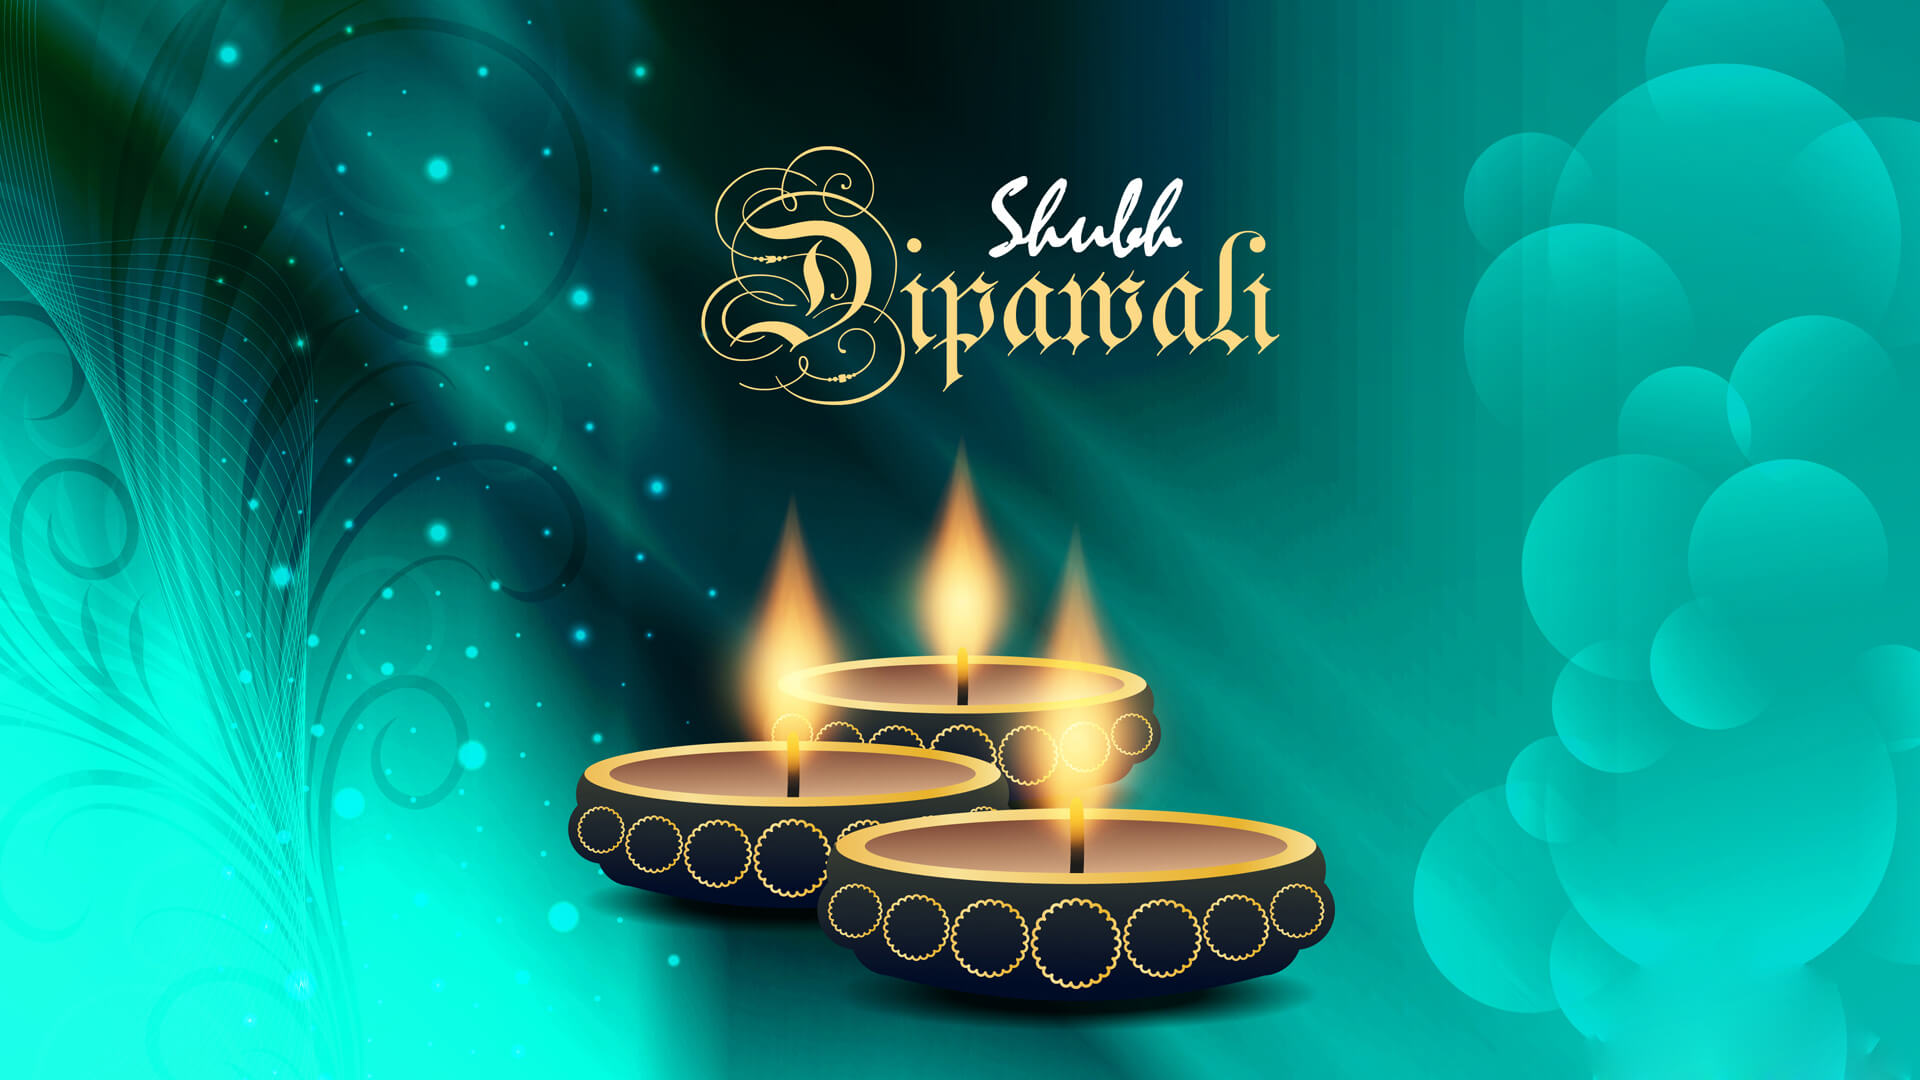 Download-Happy-Diwali-2015-HD-Wallpapers-facebook-mobile-desktop-cgfrog-12